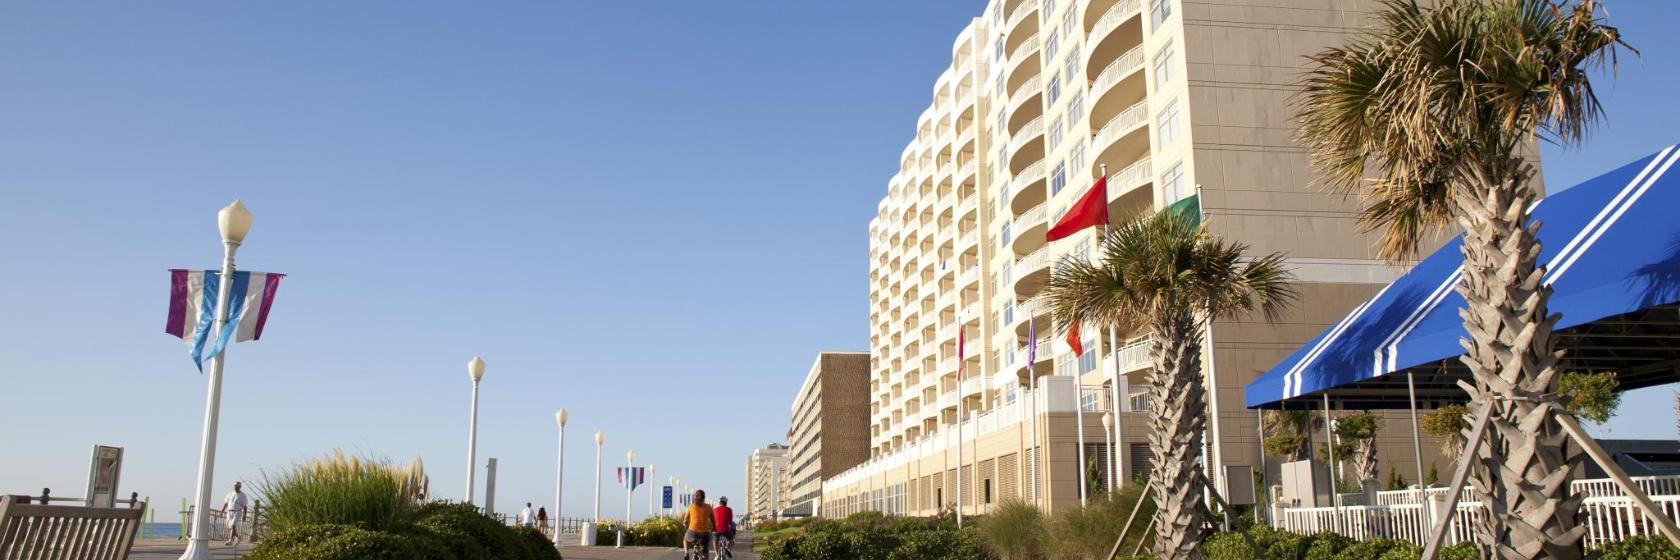 10 Top-Rated hotels in Virginia Beach Boardwalk